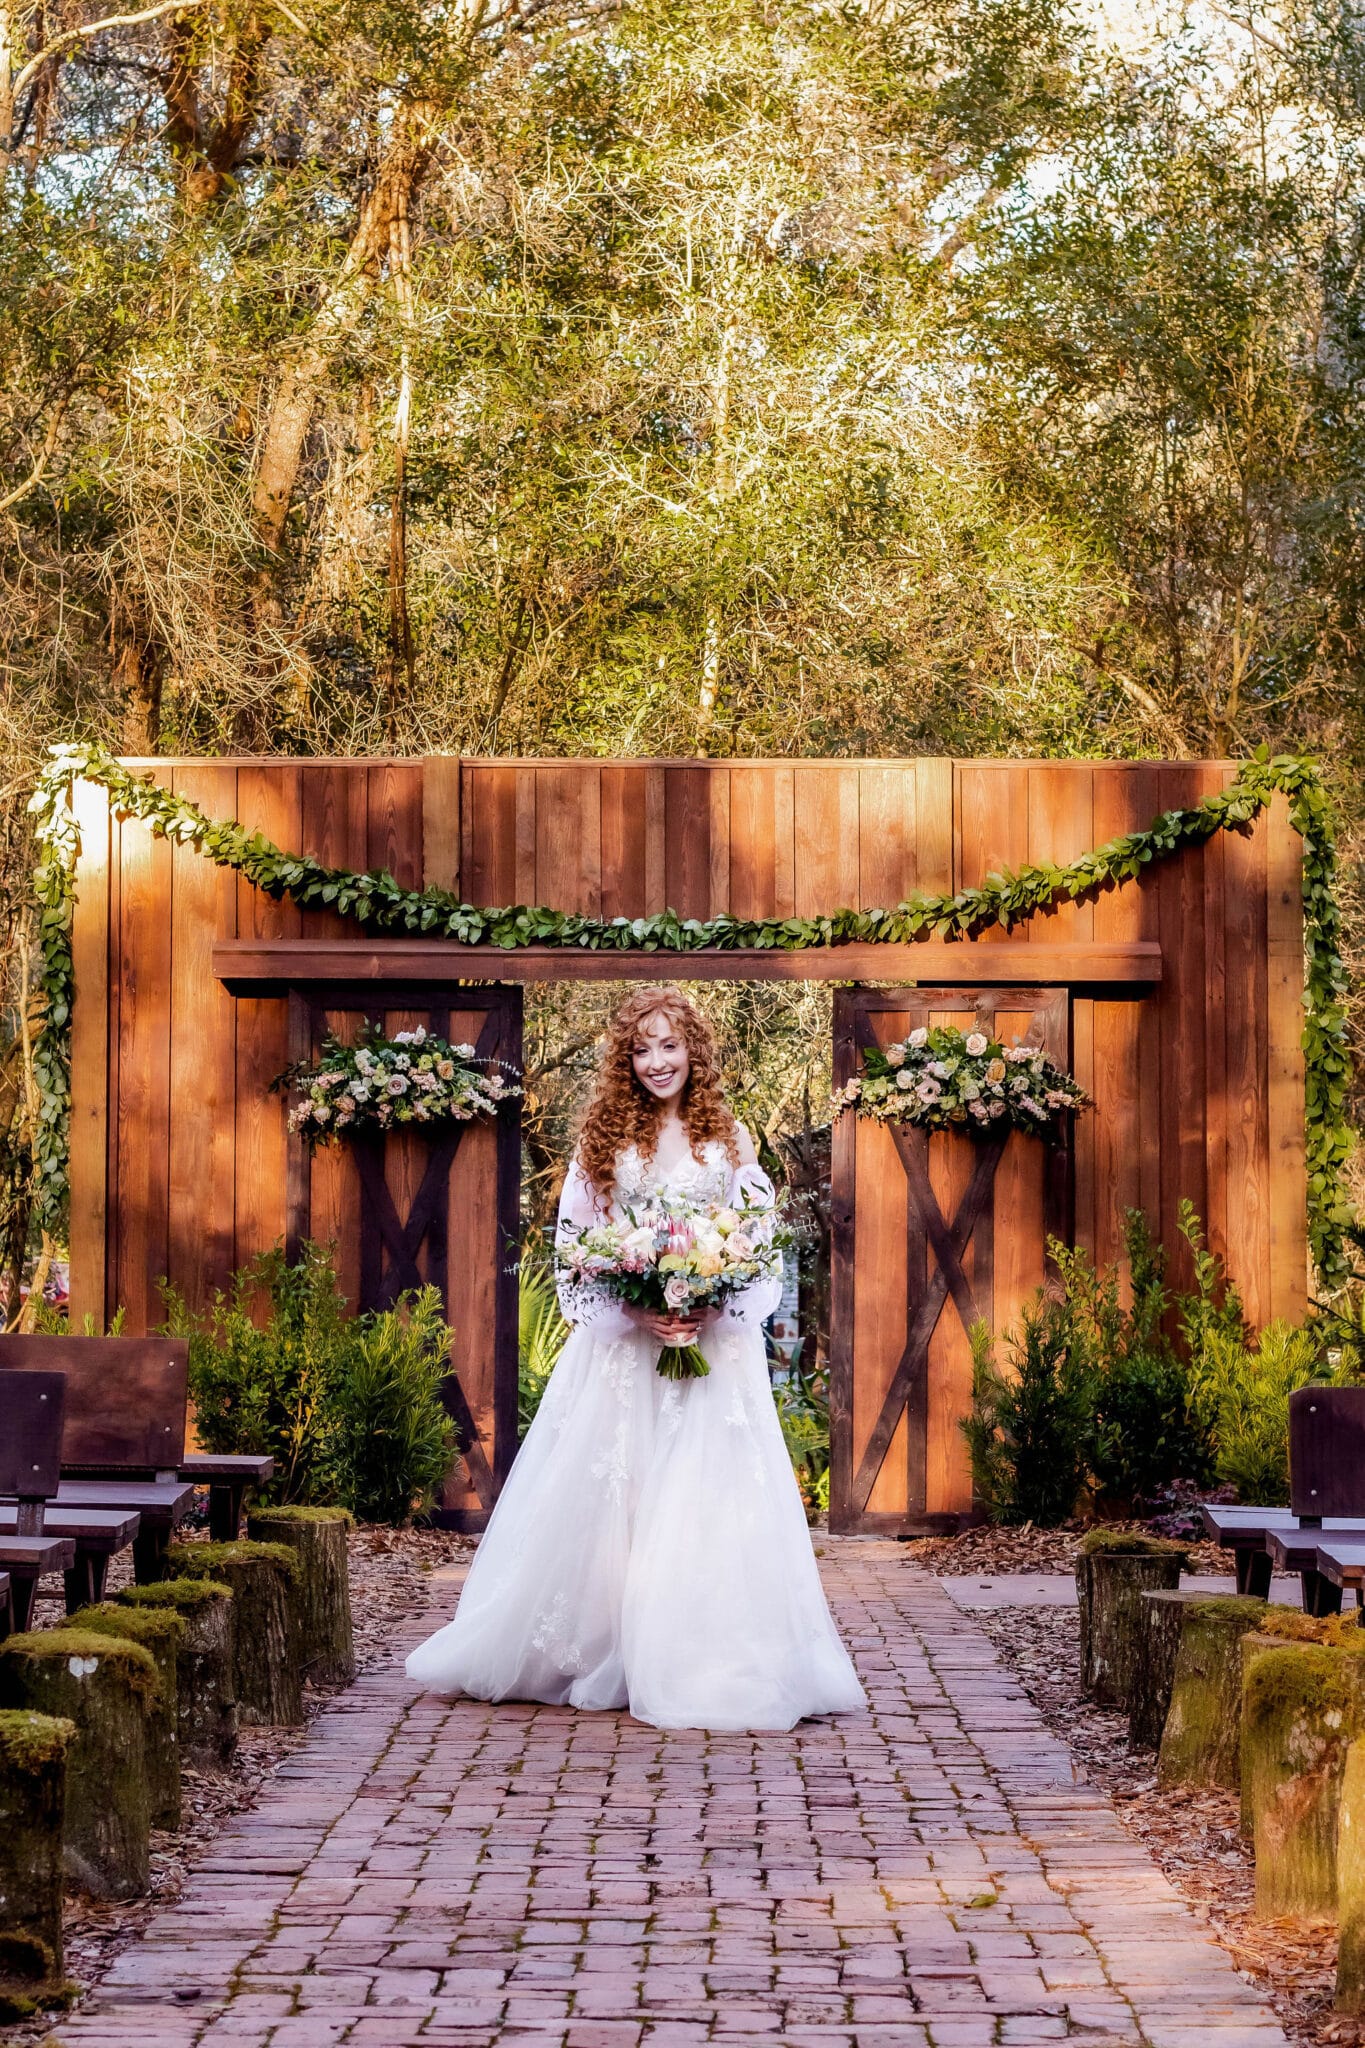 Timeless Ethereal Wedding Inspiration - Styled Shoot 8